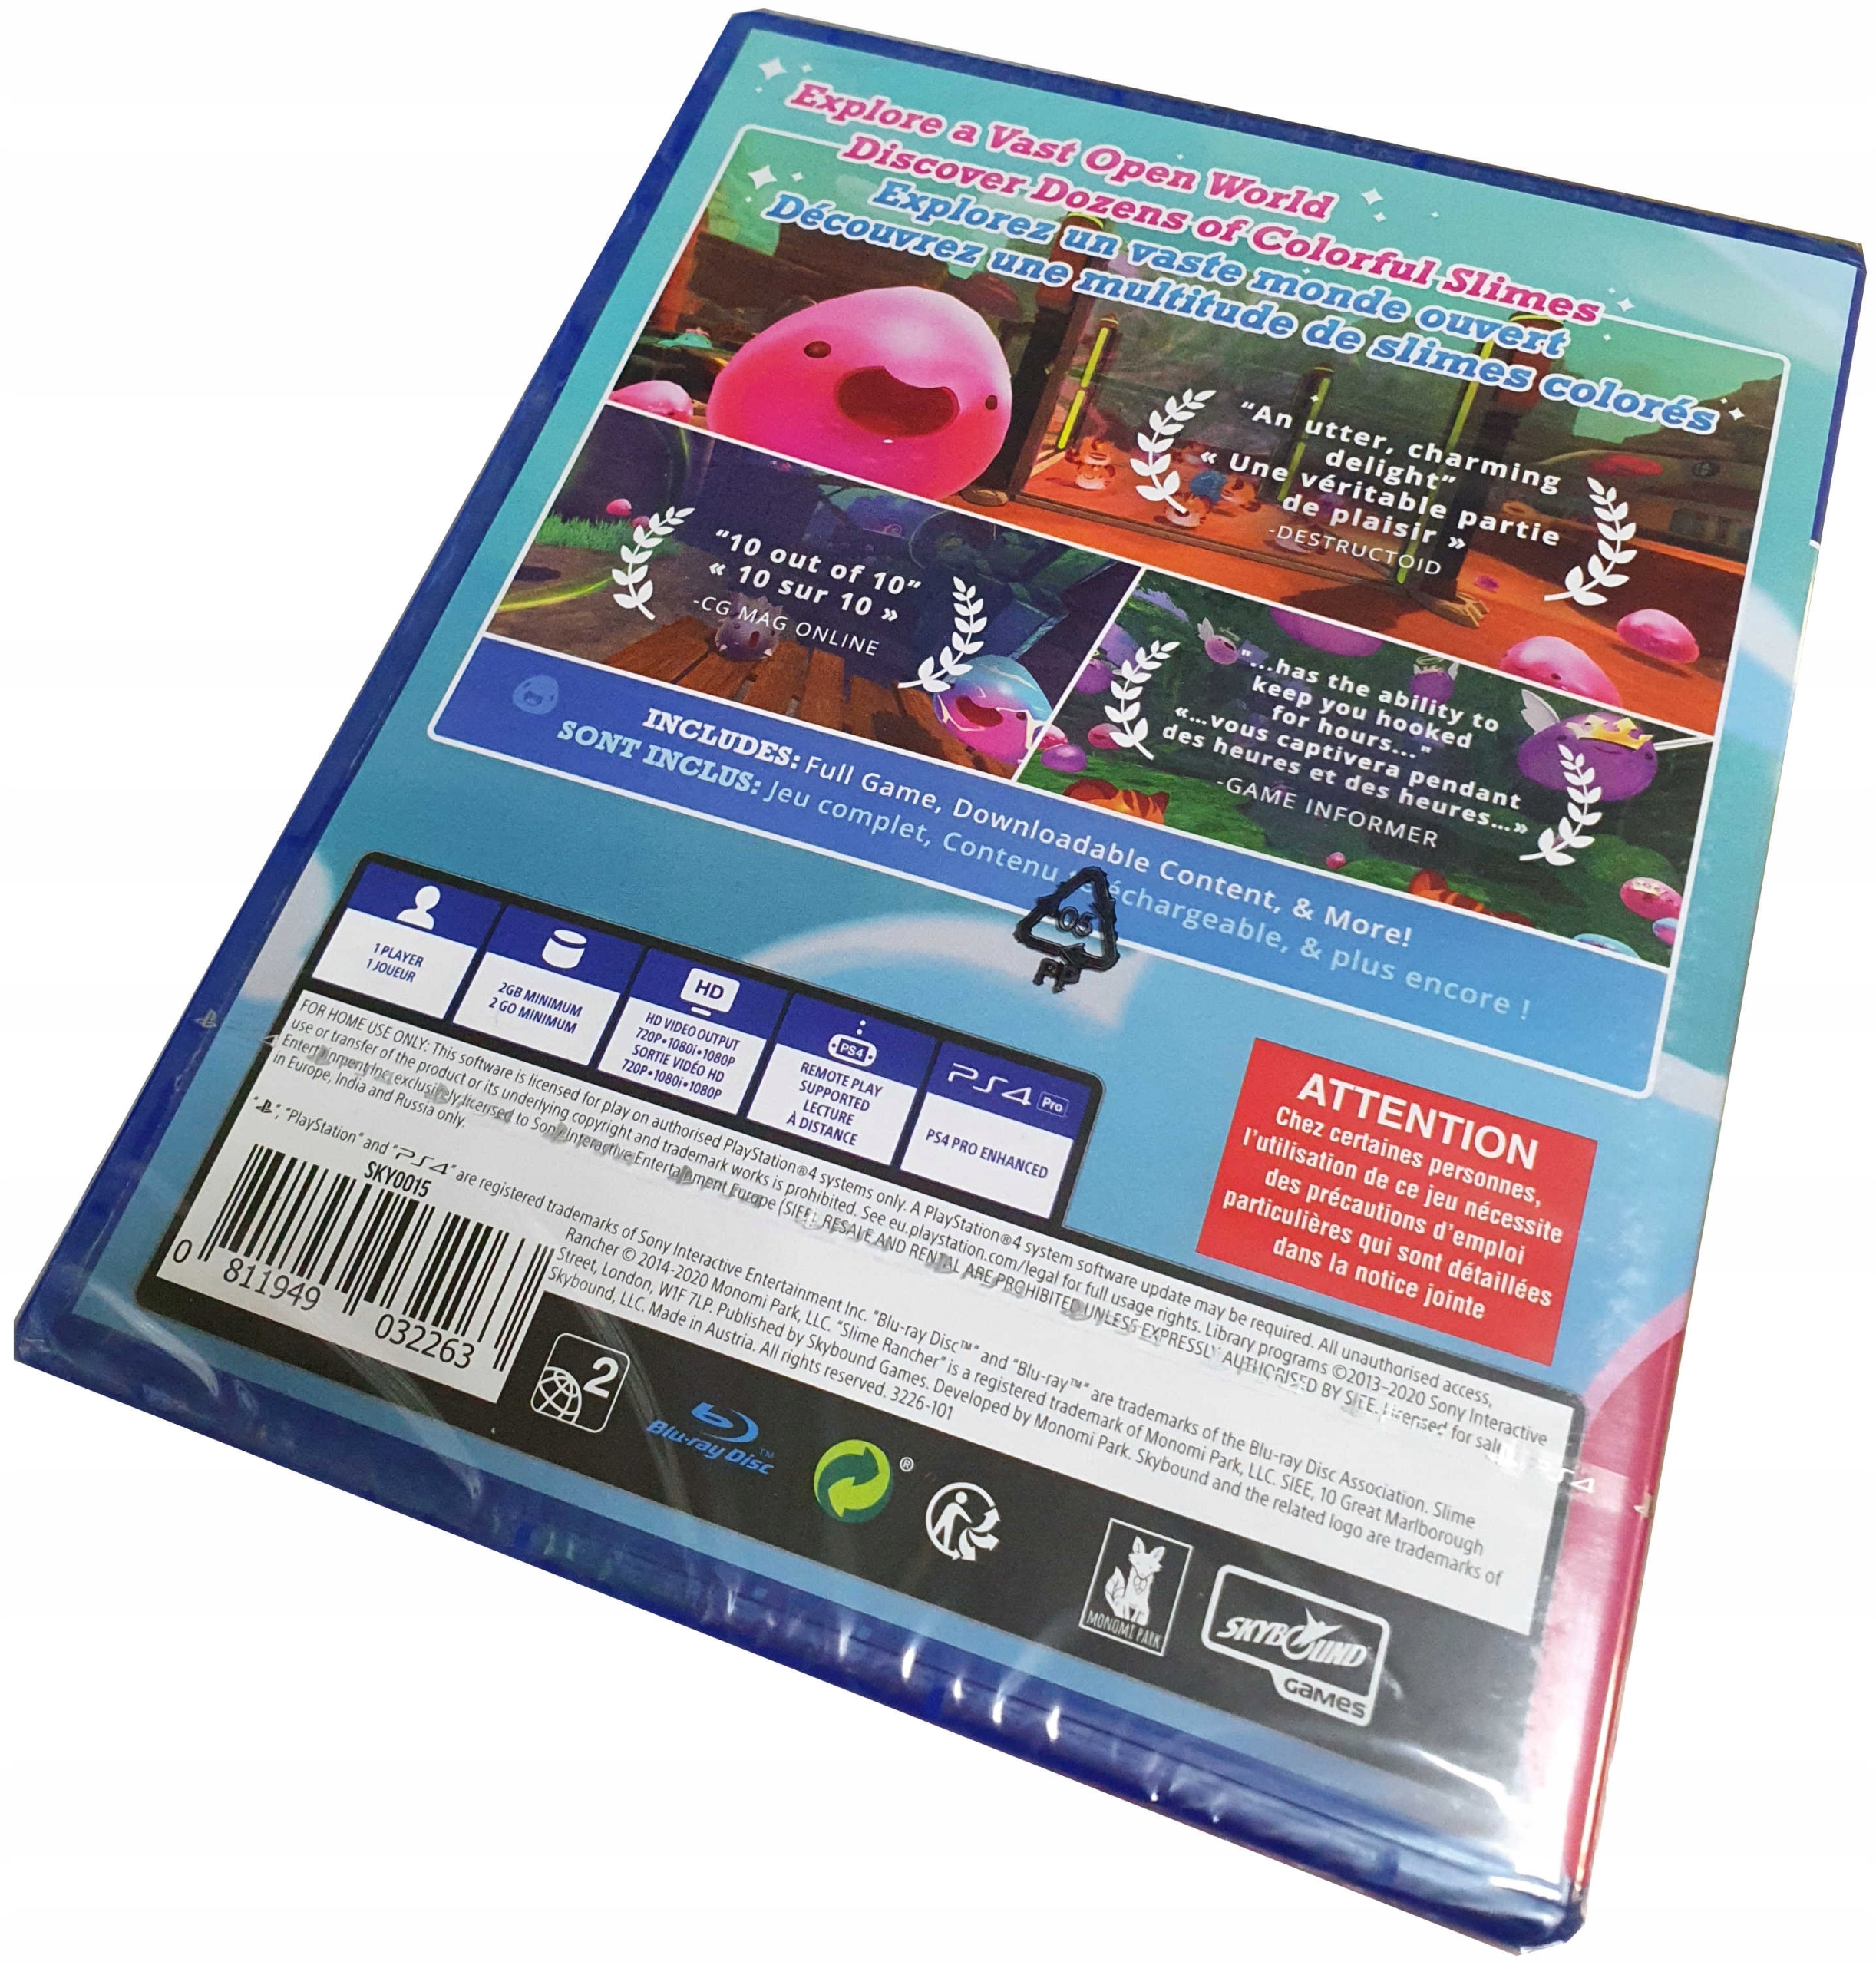 Slime Rancher Deluxe Edition Monomi Park PS4 Digital